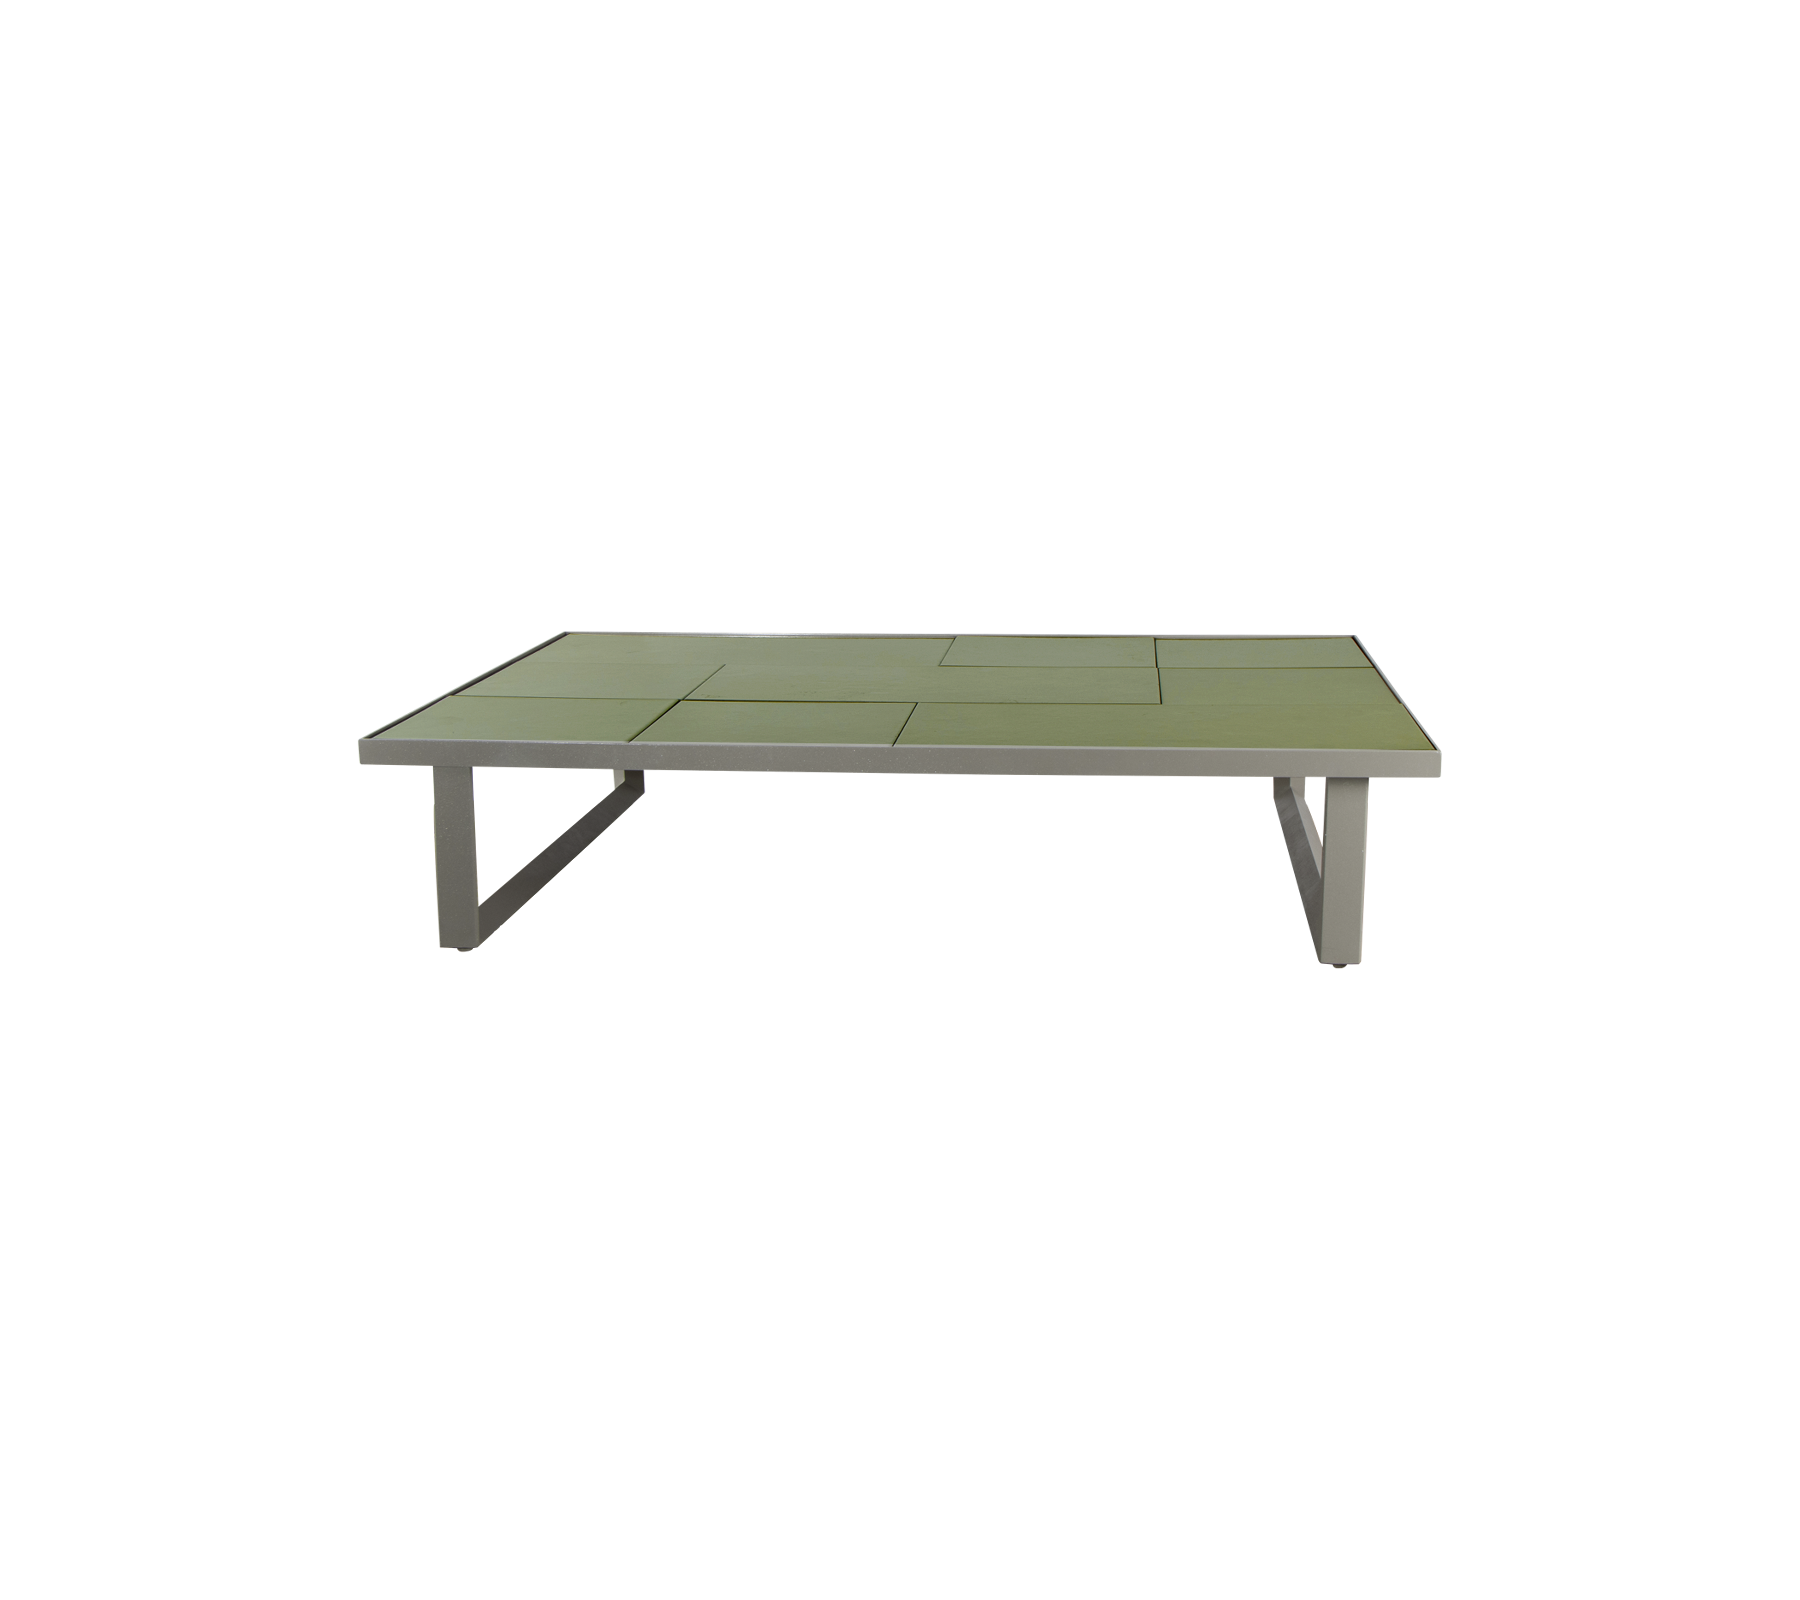 Glaze coffee table, rectangular